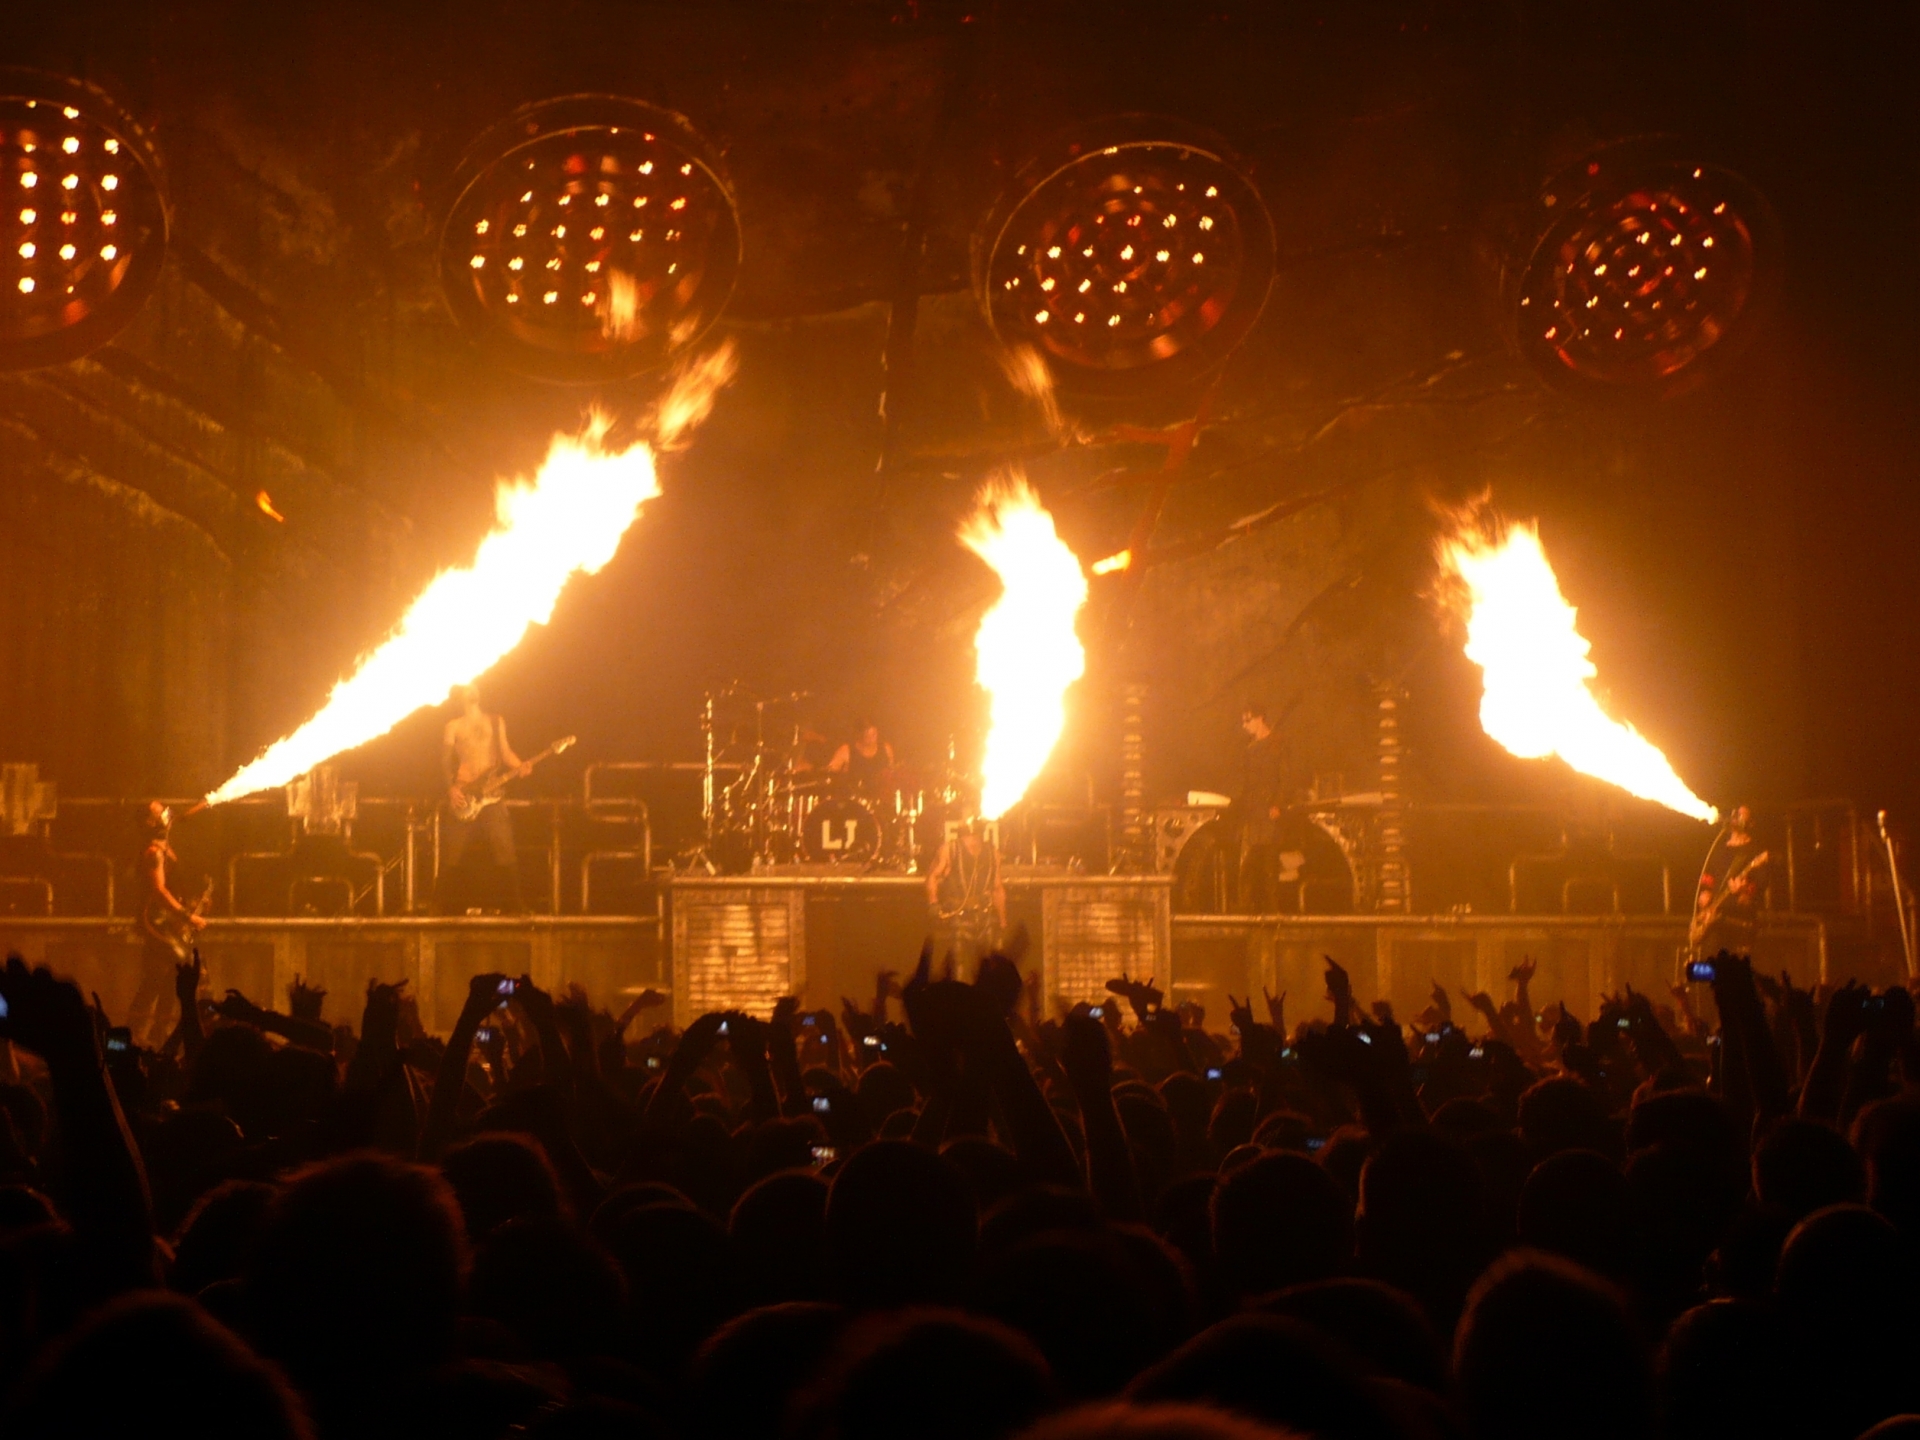 Rammstein Industrial Metal Heavy Concert Concerts Fire Wallpapers Hd Desktop And Mobile